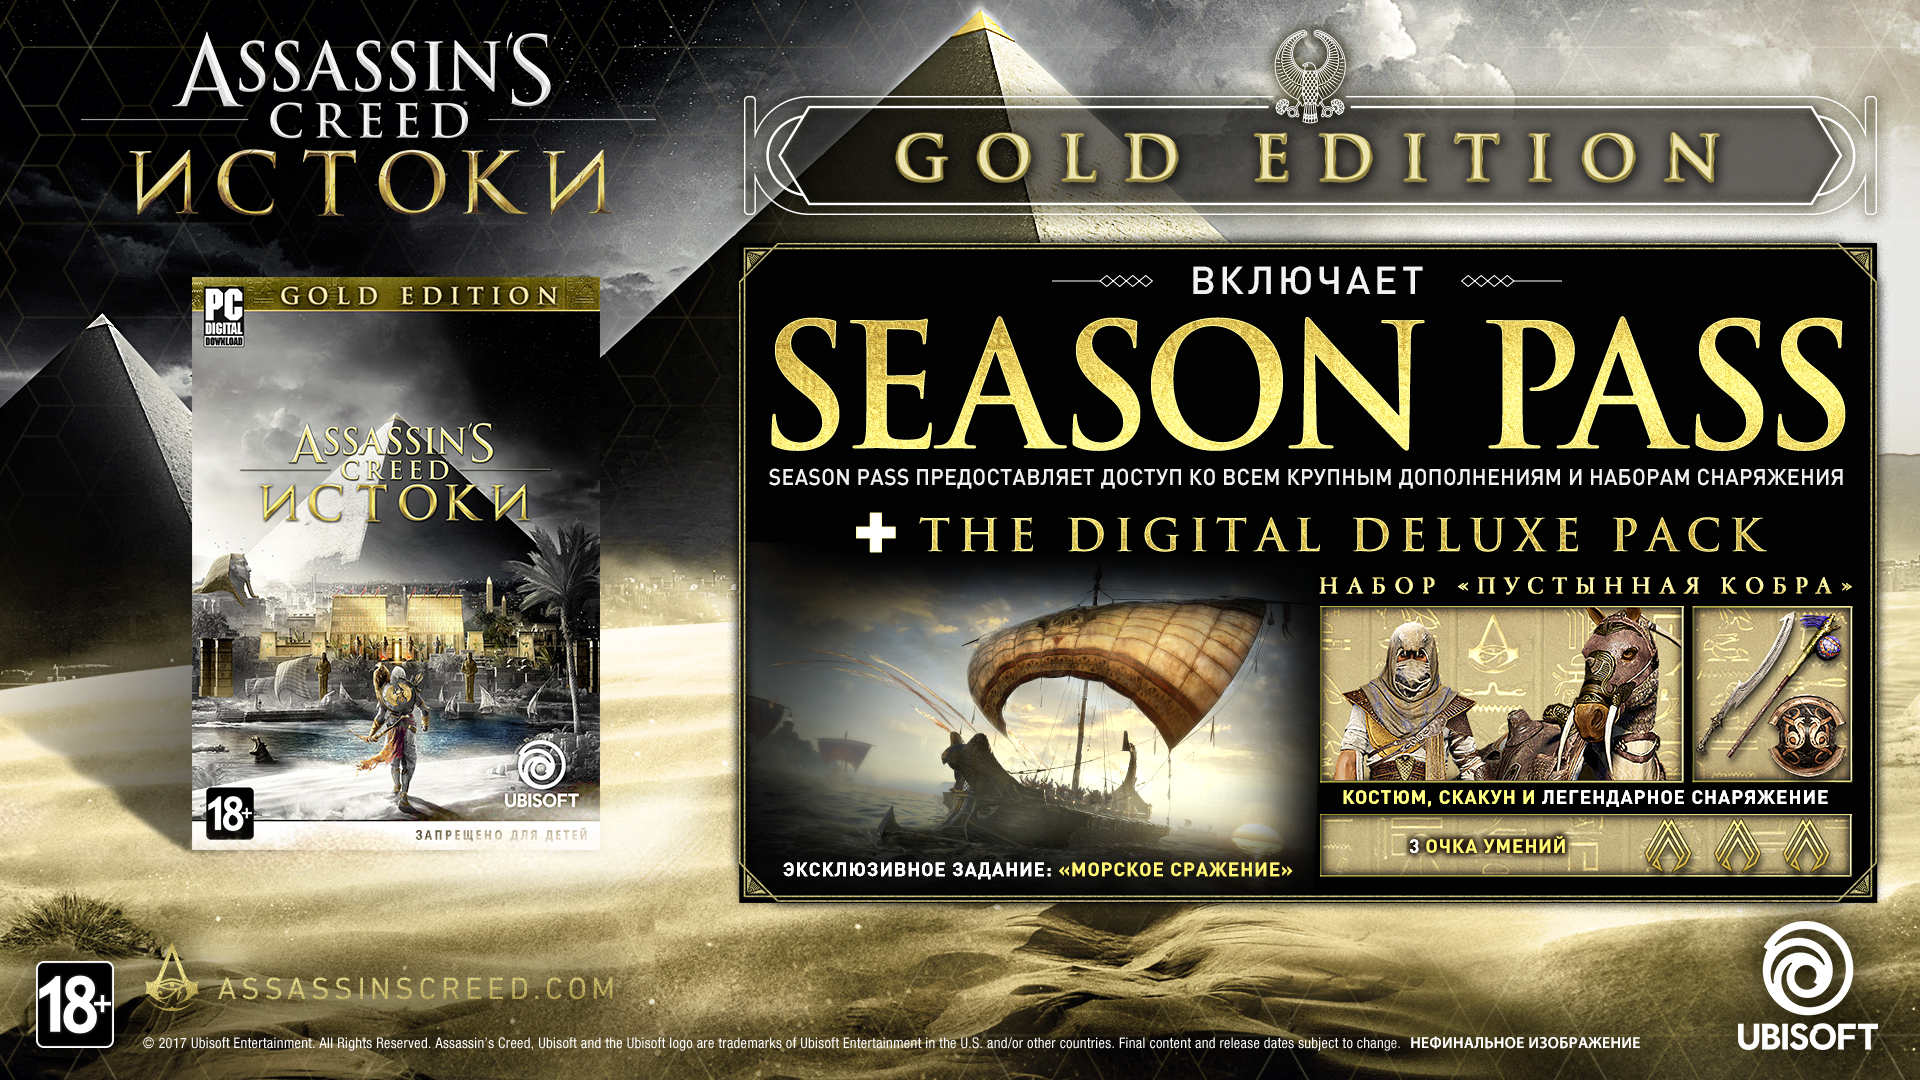 Игра для ПК Assassins Creed Истоки - GOLD EDITION [UB_3692] (электронный ключ) игра для пк assassins creed истоки gold edition [ub 3692] электронный ключ